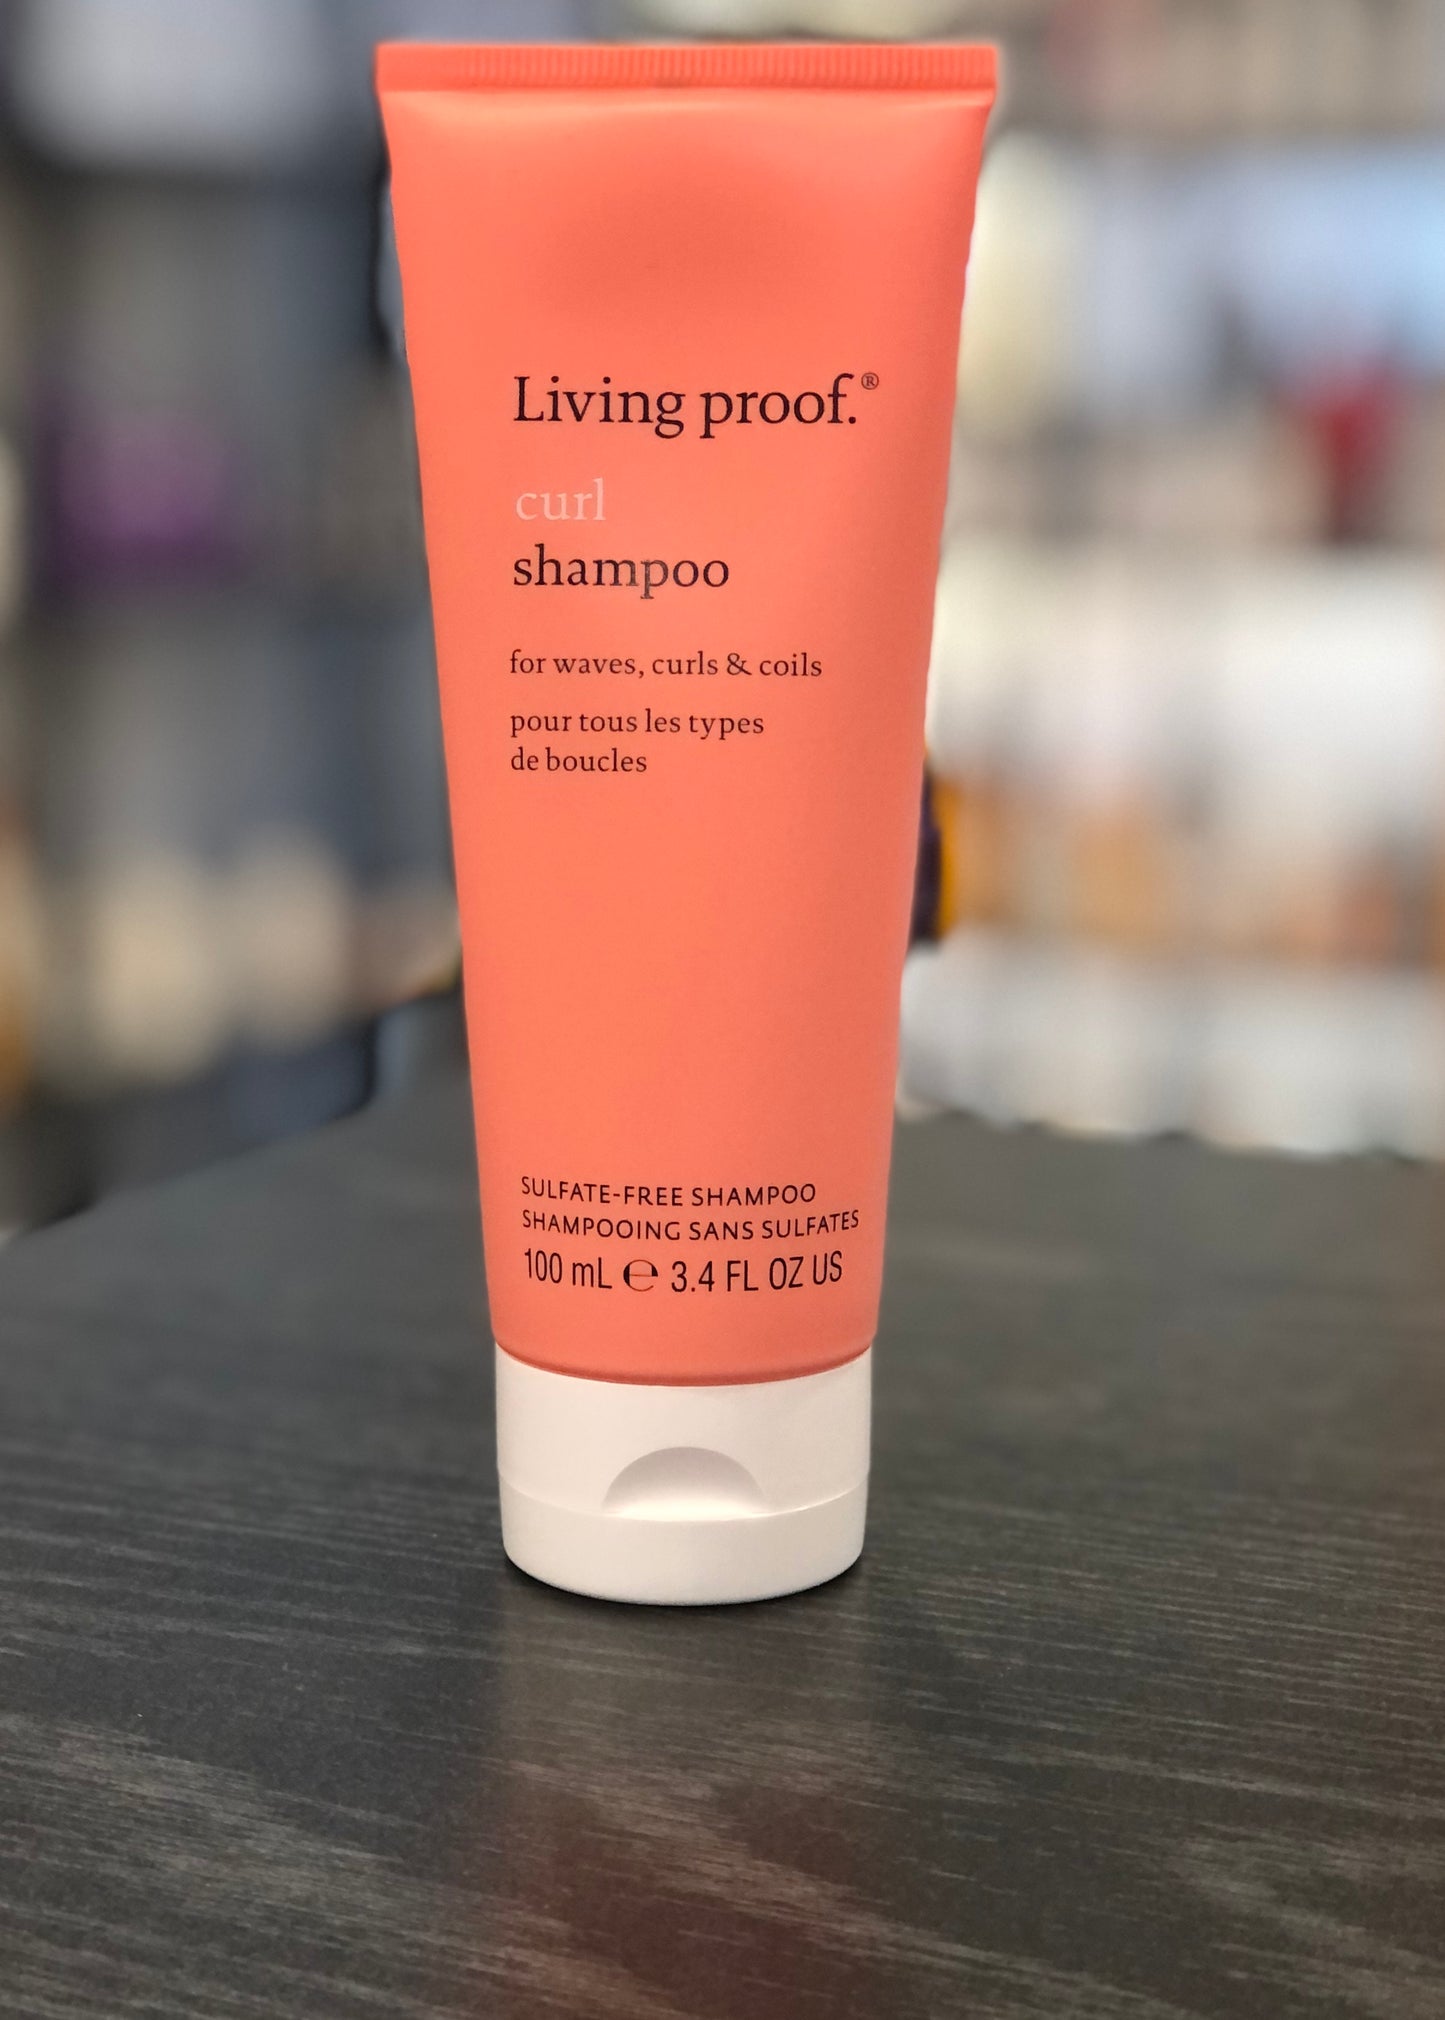 Living proof - Curl shampoo 3.4 fl. oz./ 100 ml